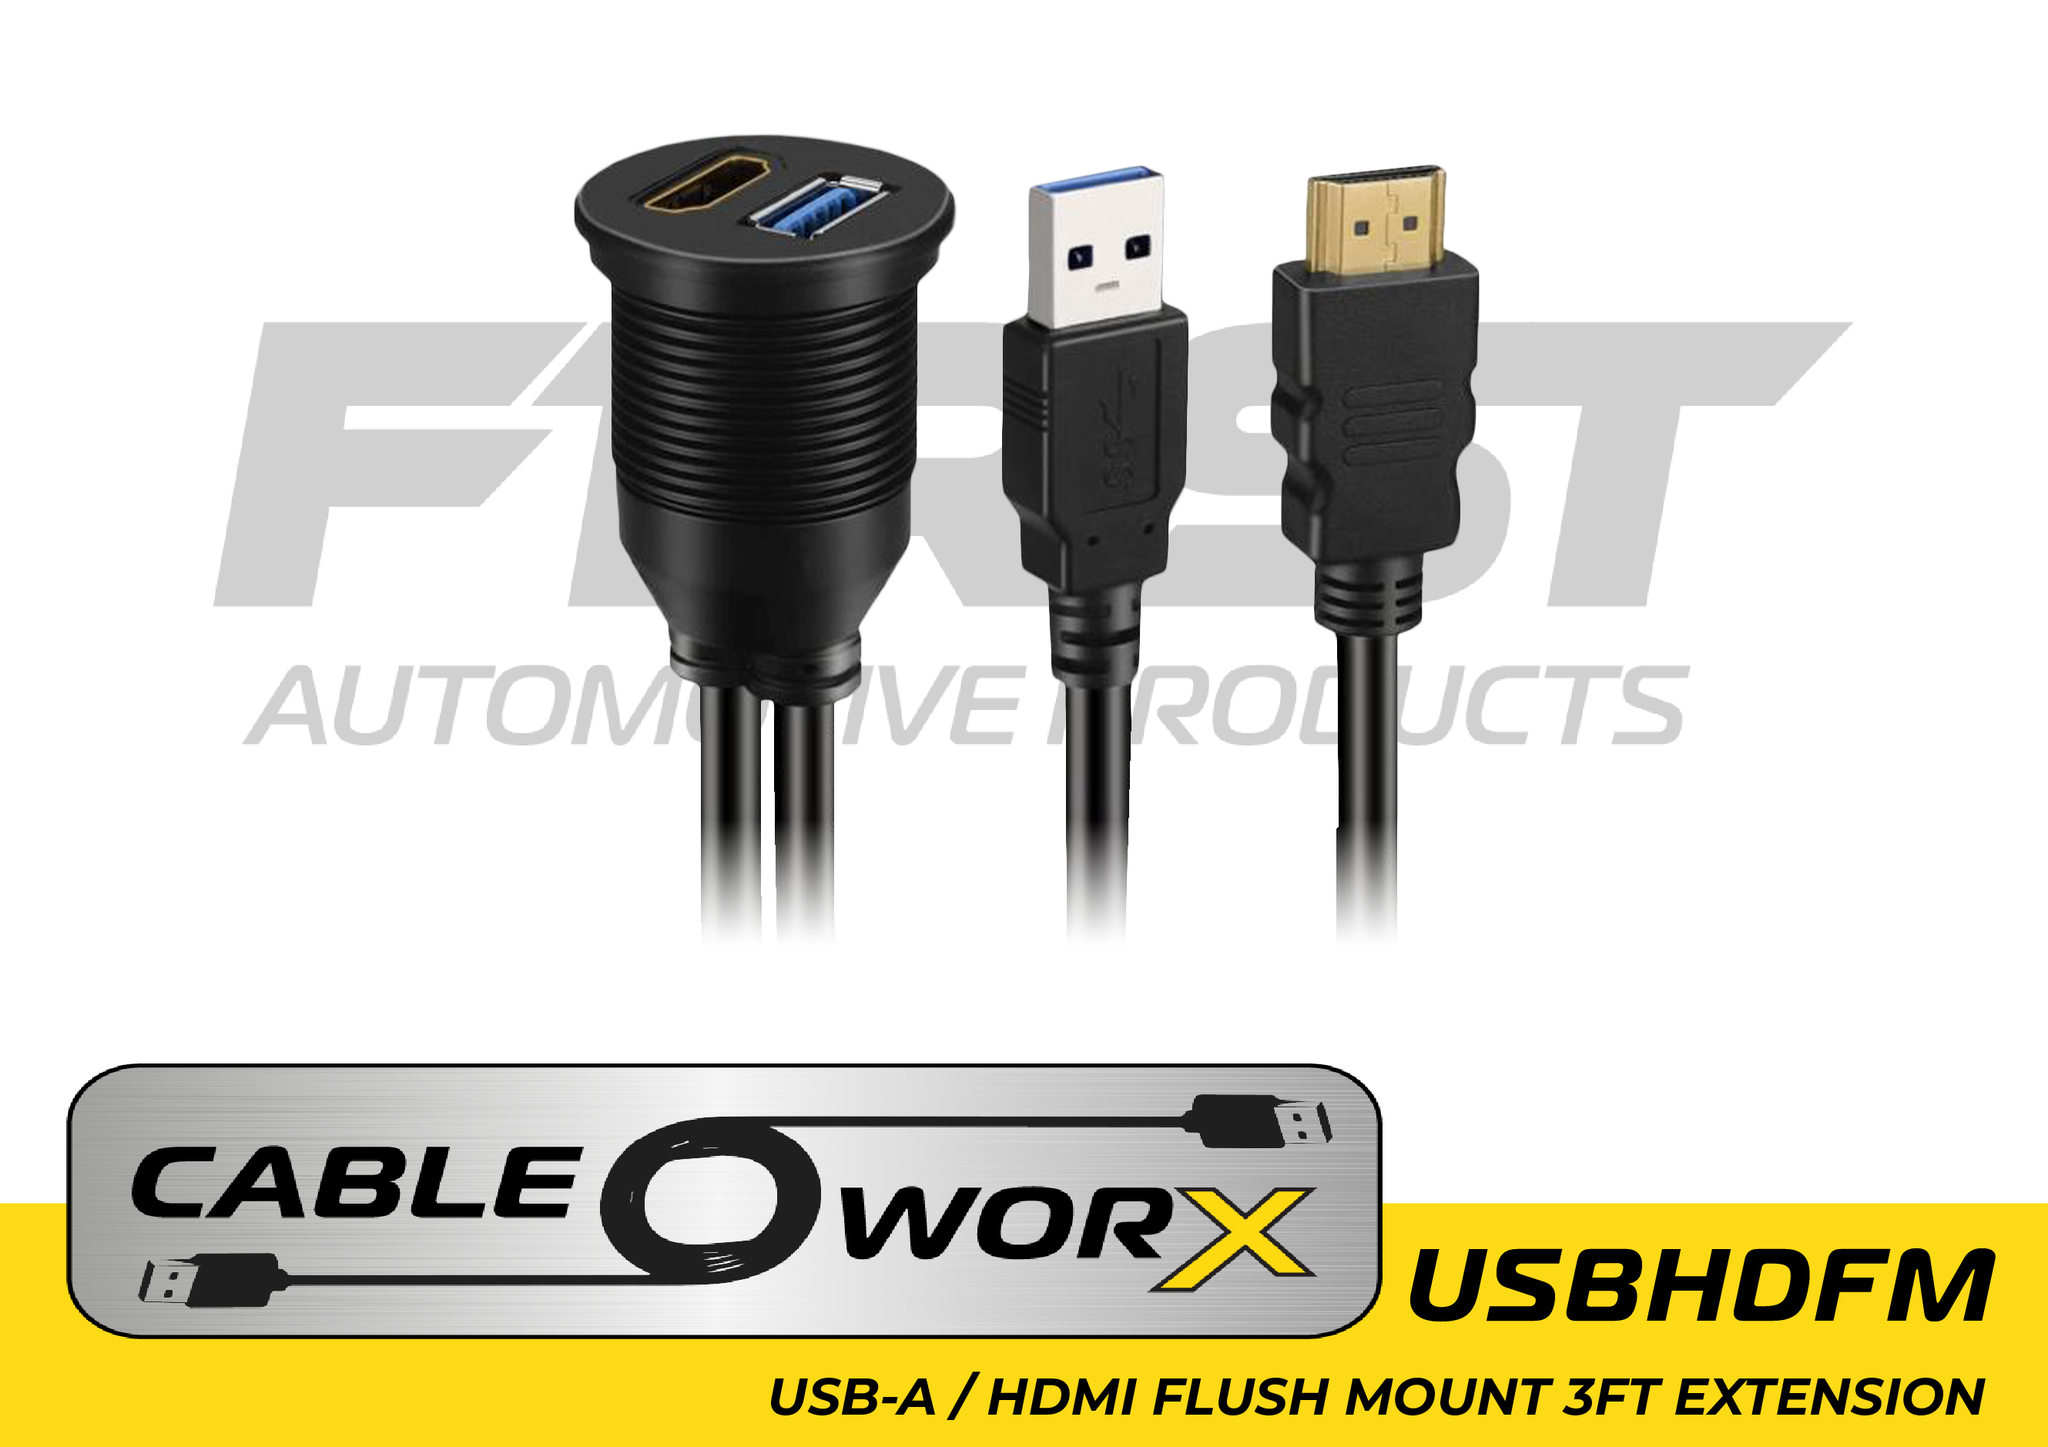 USBHDFM